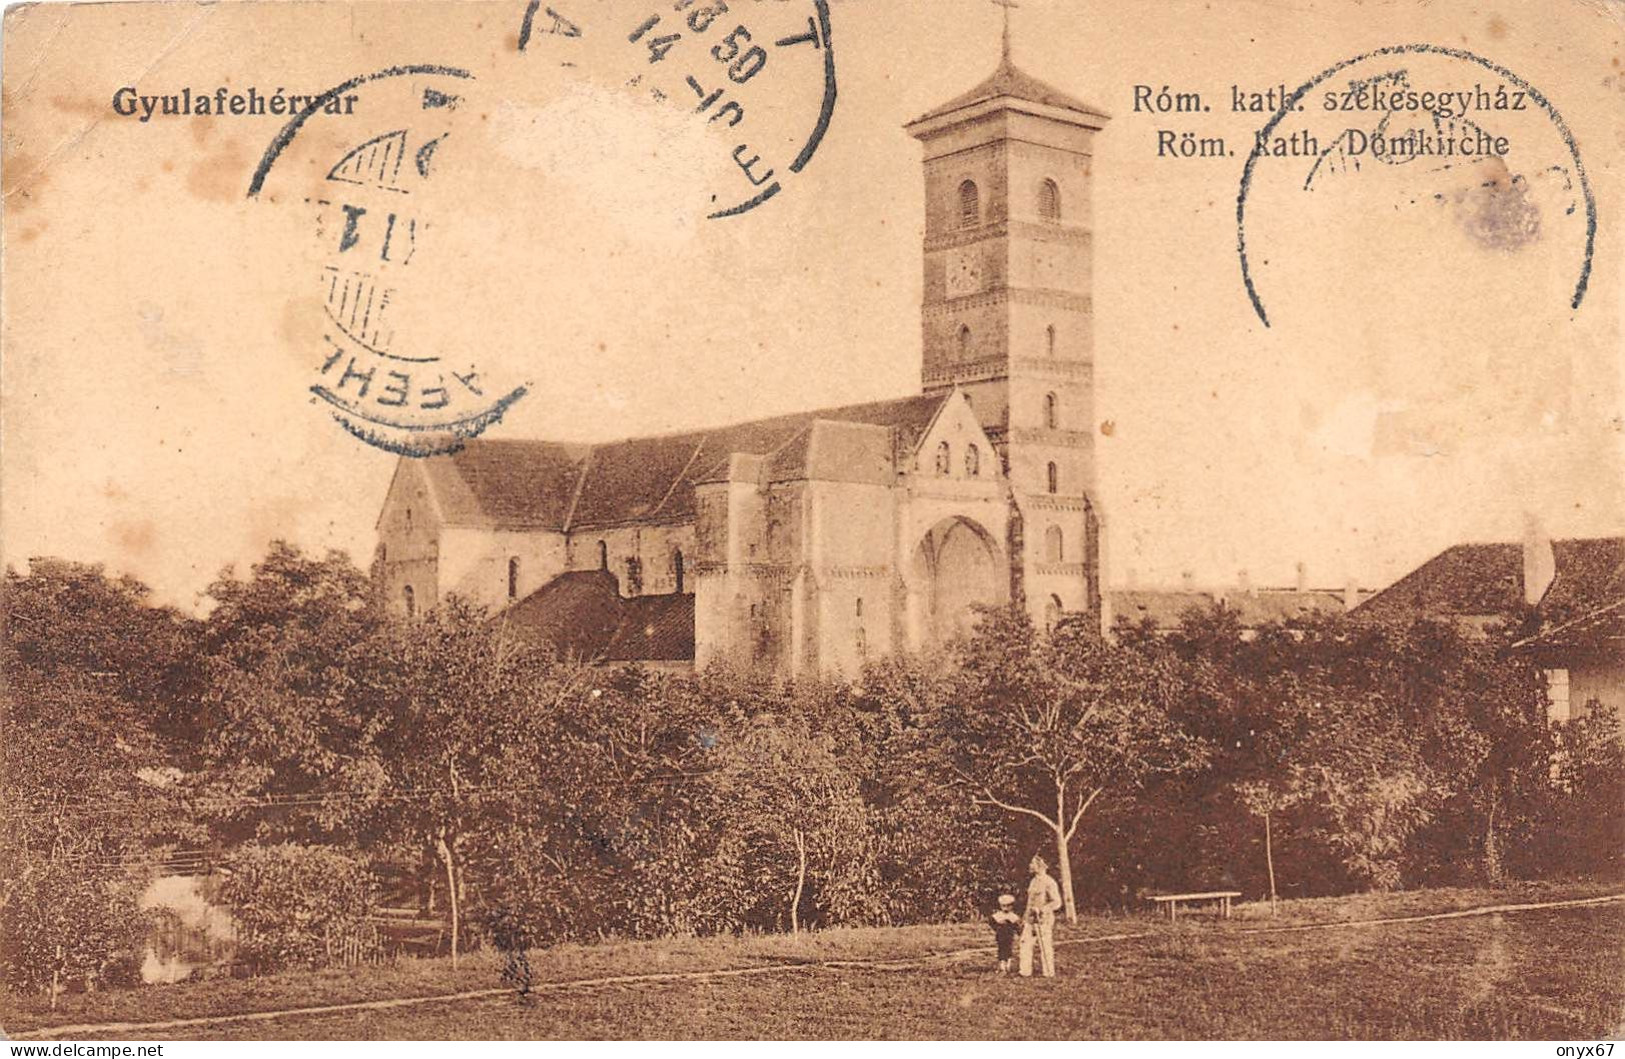 GYULAFEHERVAR-ALBA LULIA-KARLSBURG-ROUMANIE-ROUMANIA -RUMÄNIEN-Székesegyhaz  Röm. Kath. Domkirche - Rumänien